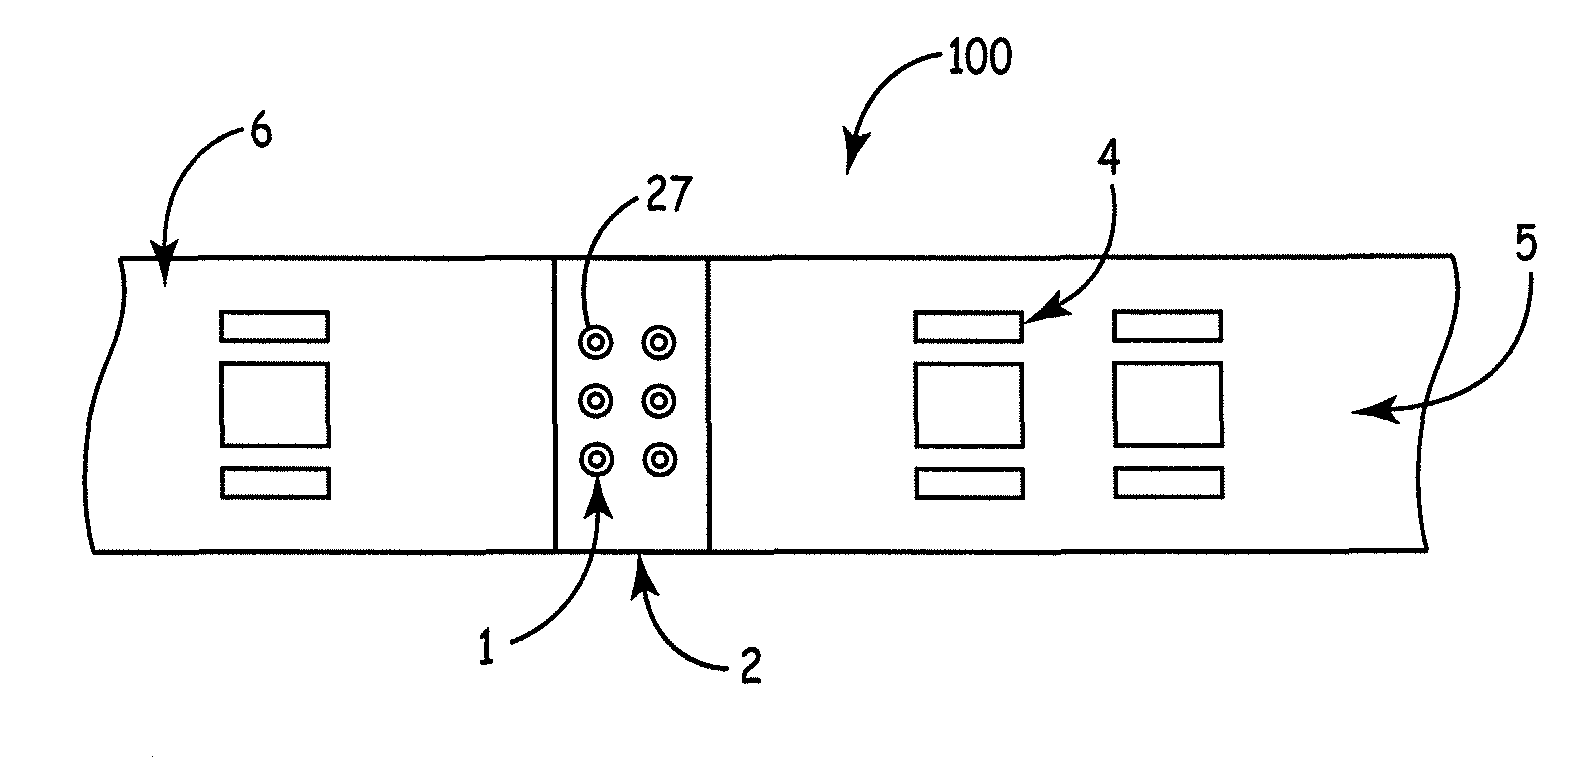 Printed circuit board flexible interconnect design